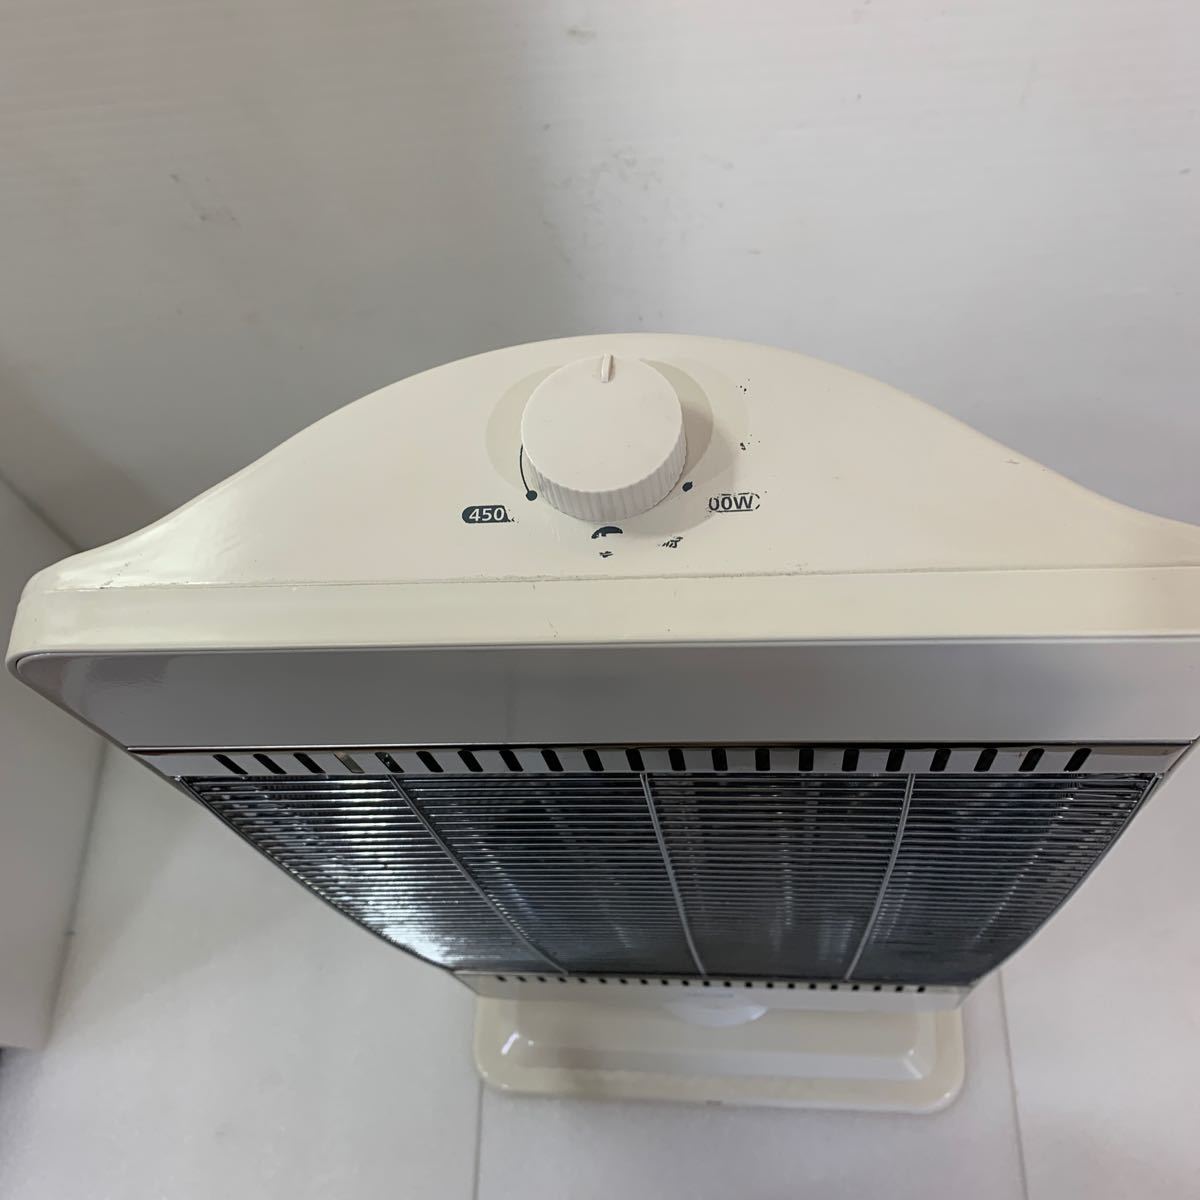 rm6116 中古 TEKNOS テクノス カーボンヒーター CHM-4531(W) 暖房機器 0123_画像5